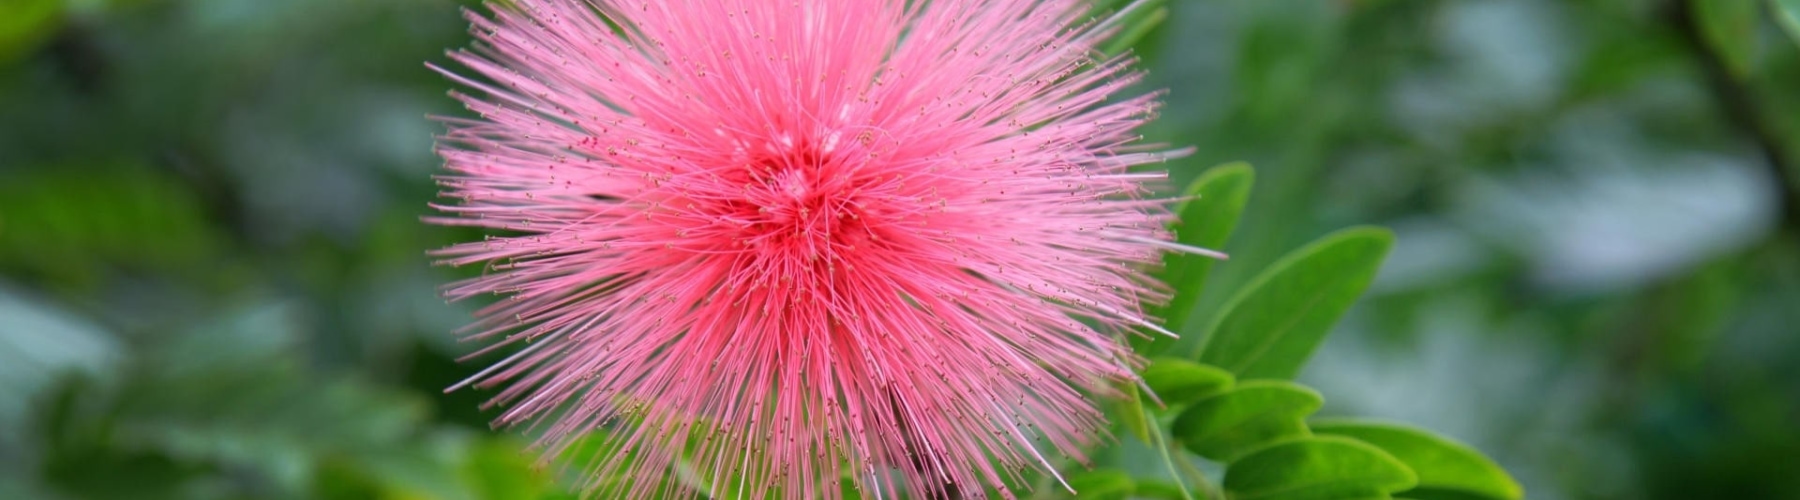 hawaii_blossom_pink_flowers_calliandra_1920x1080_wallpaper_www_miscellaneoushi_com_37.jpg